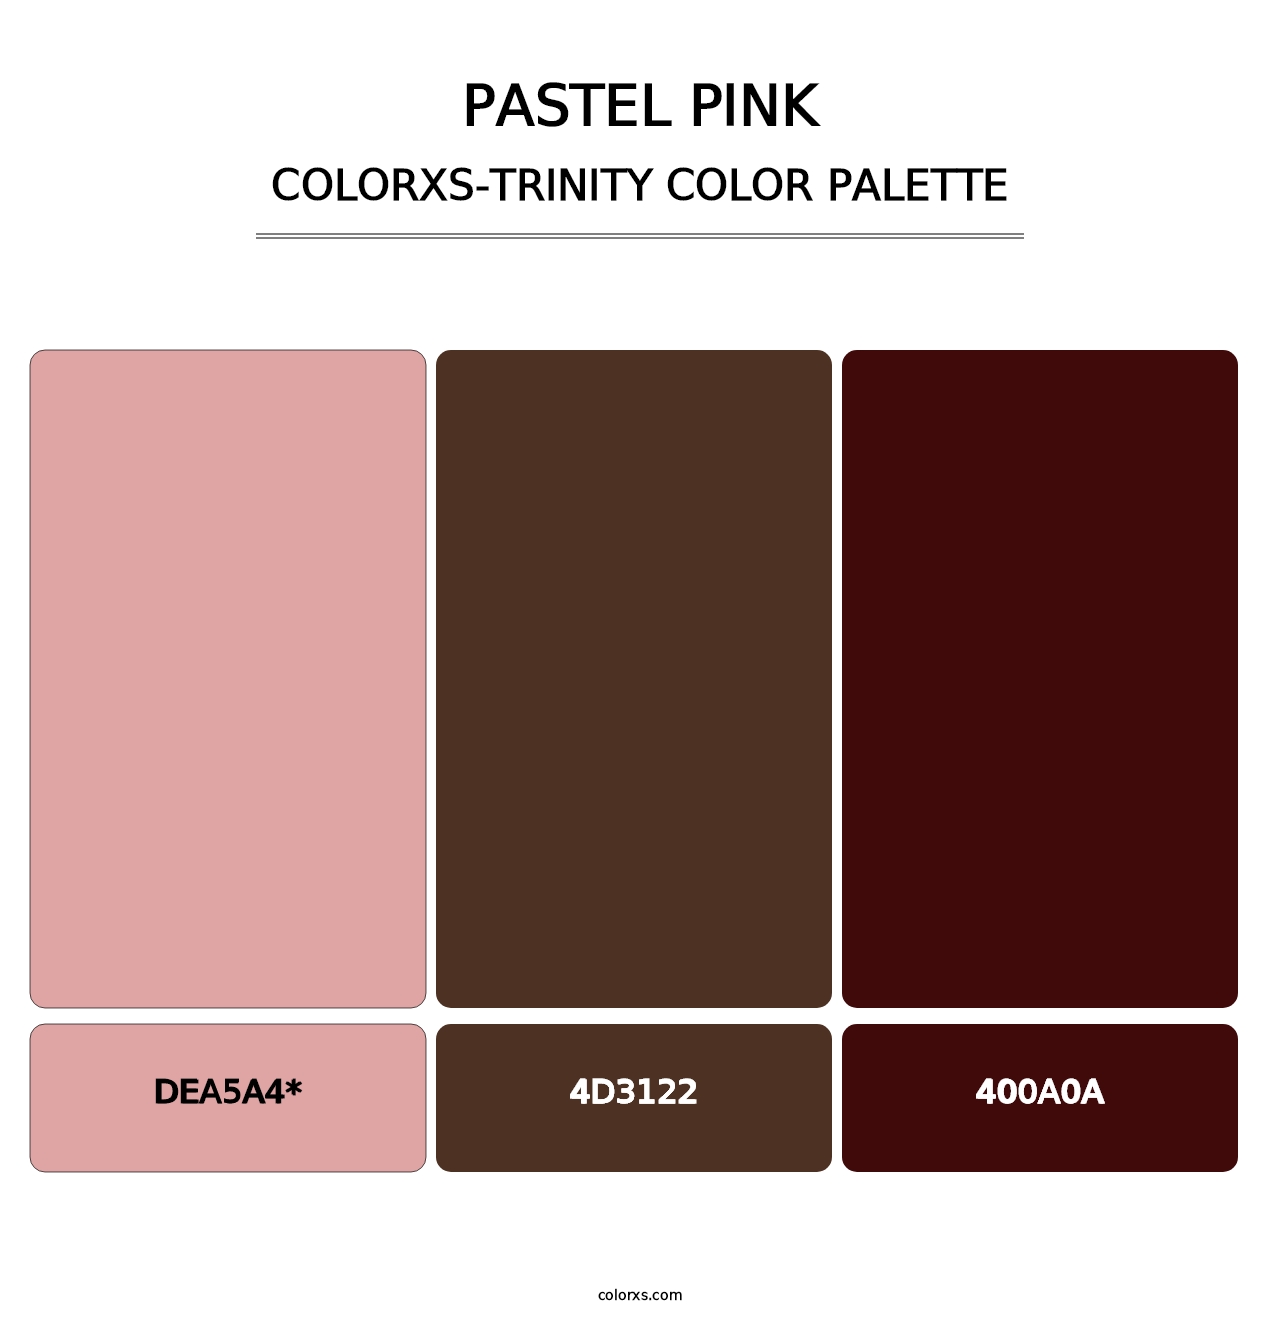 Pastel Pink - Colorxs Trinity Palette